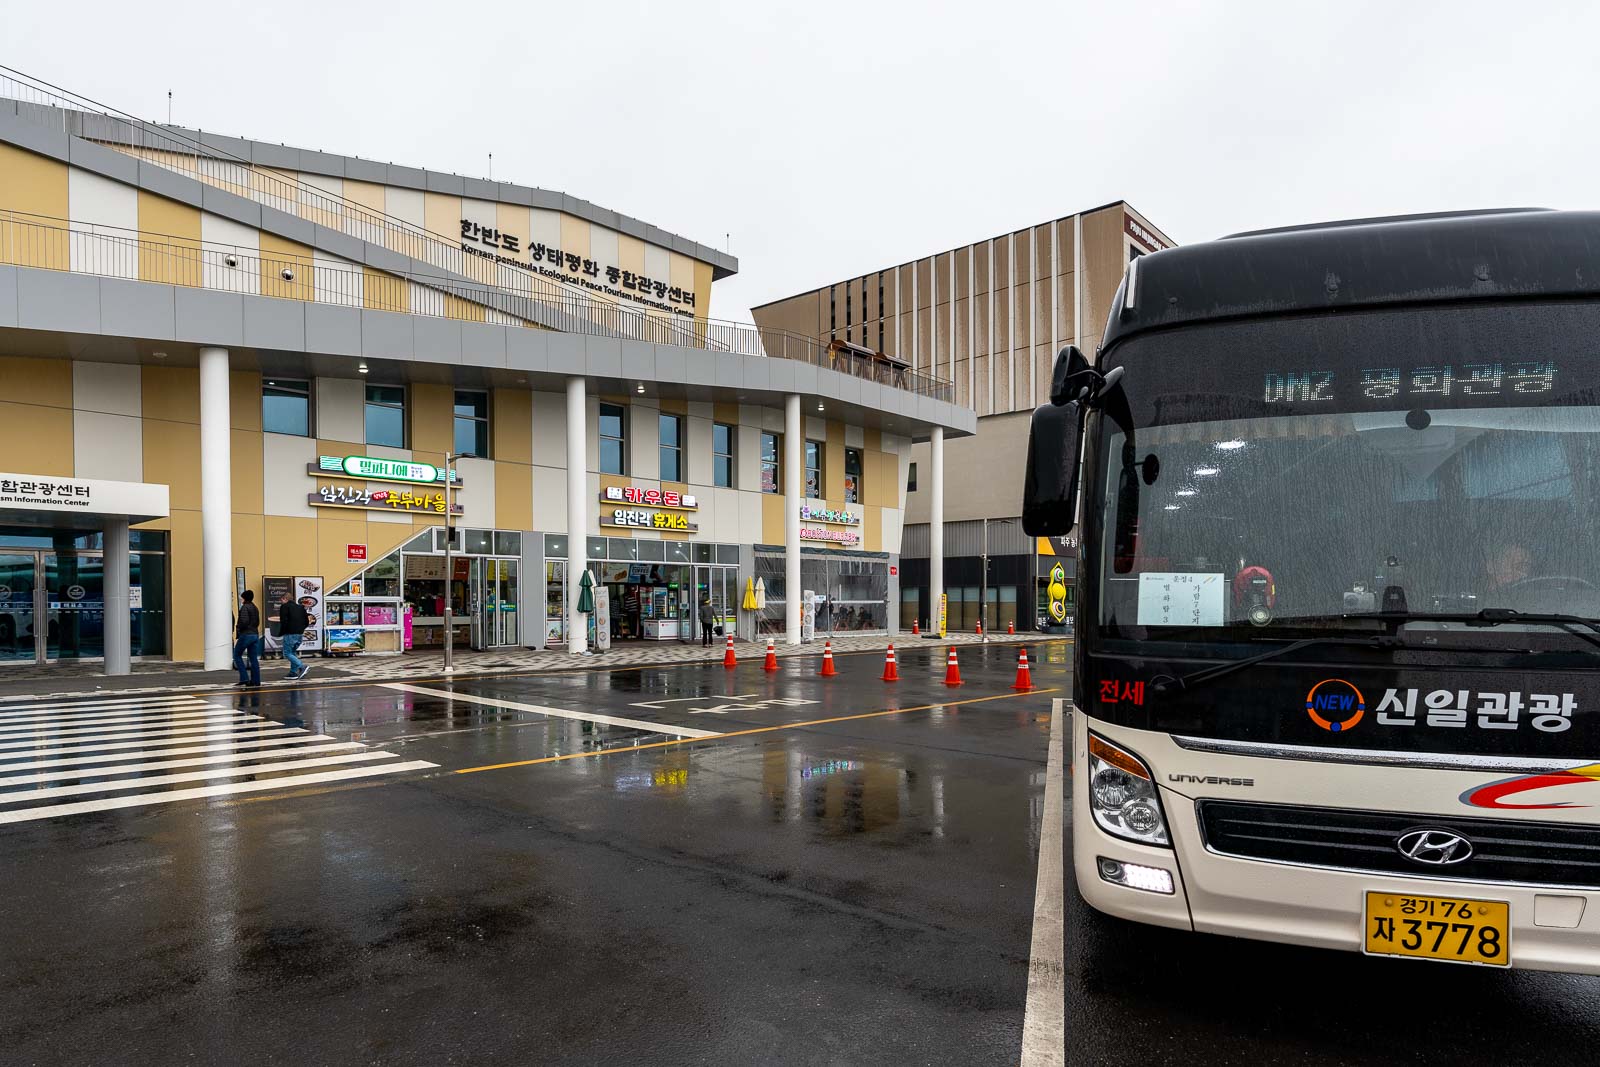 Official bus tour of the DMZ